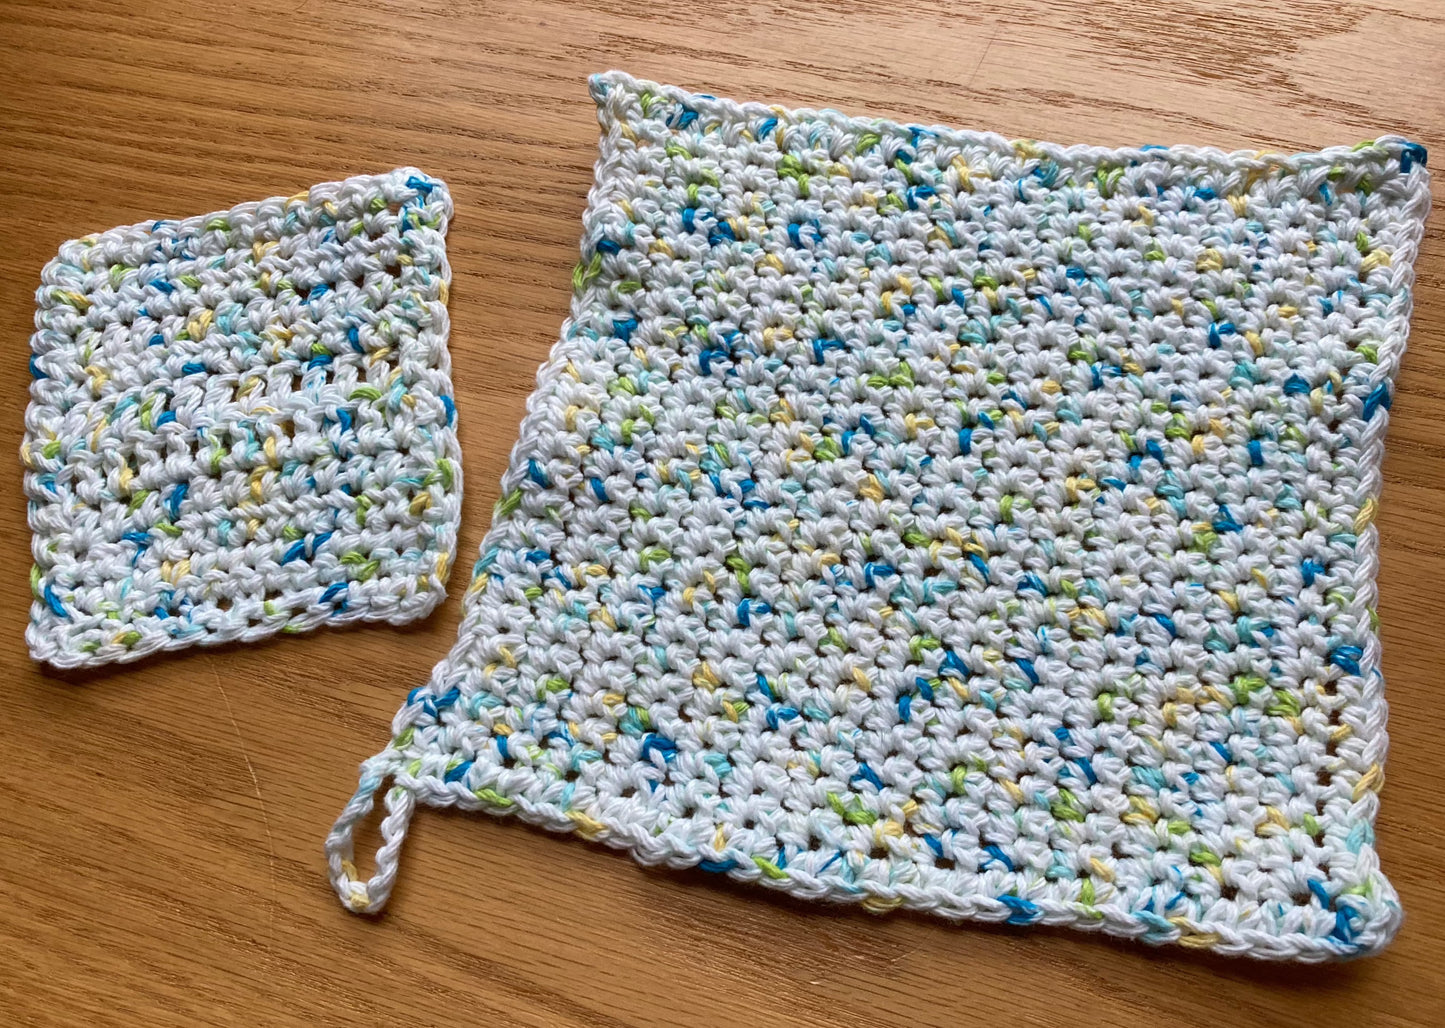 Crochet Techniques for Beginners